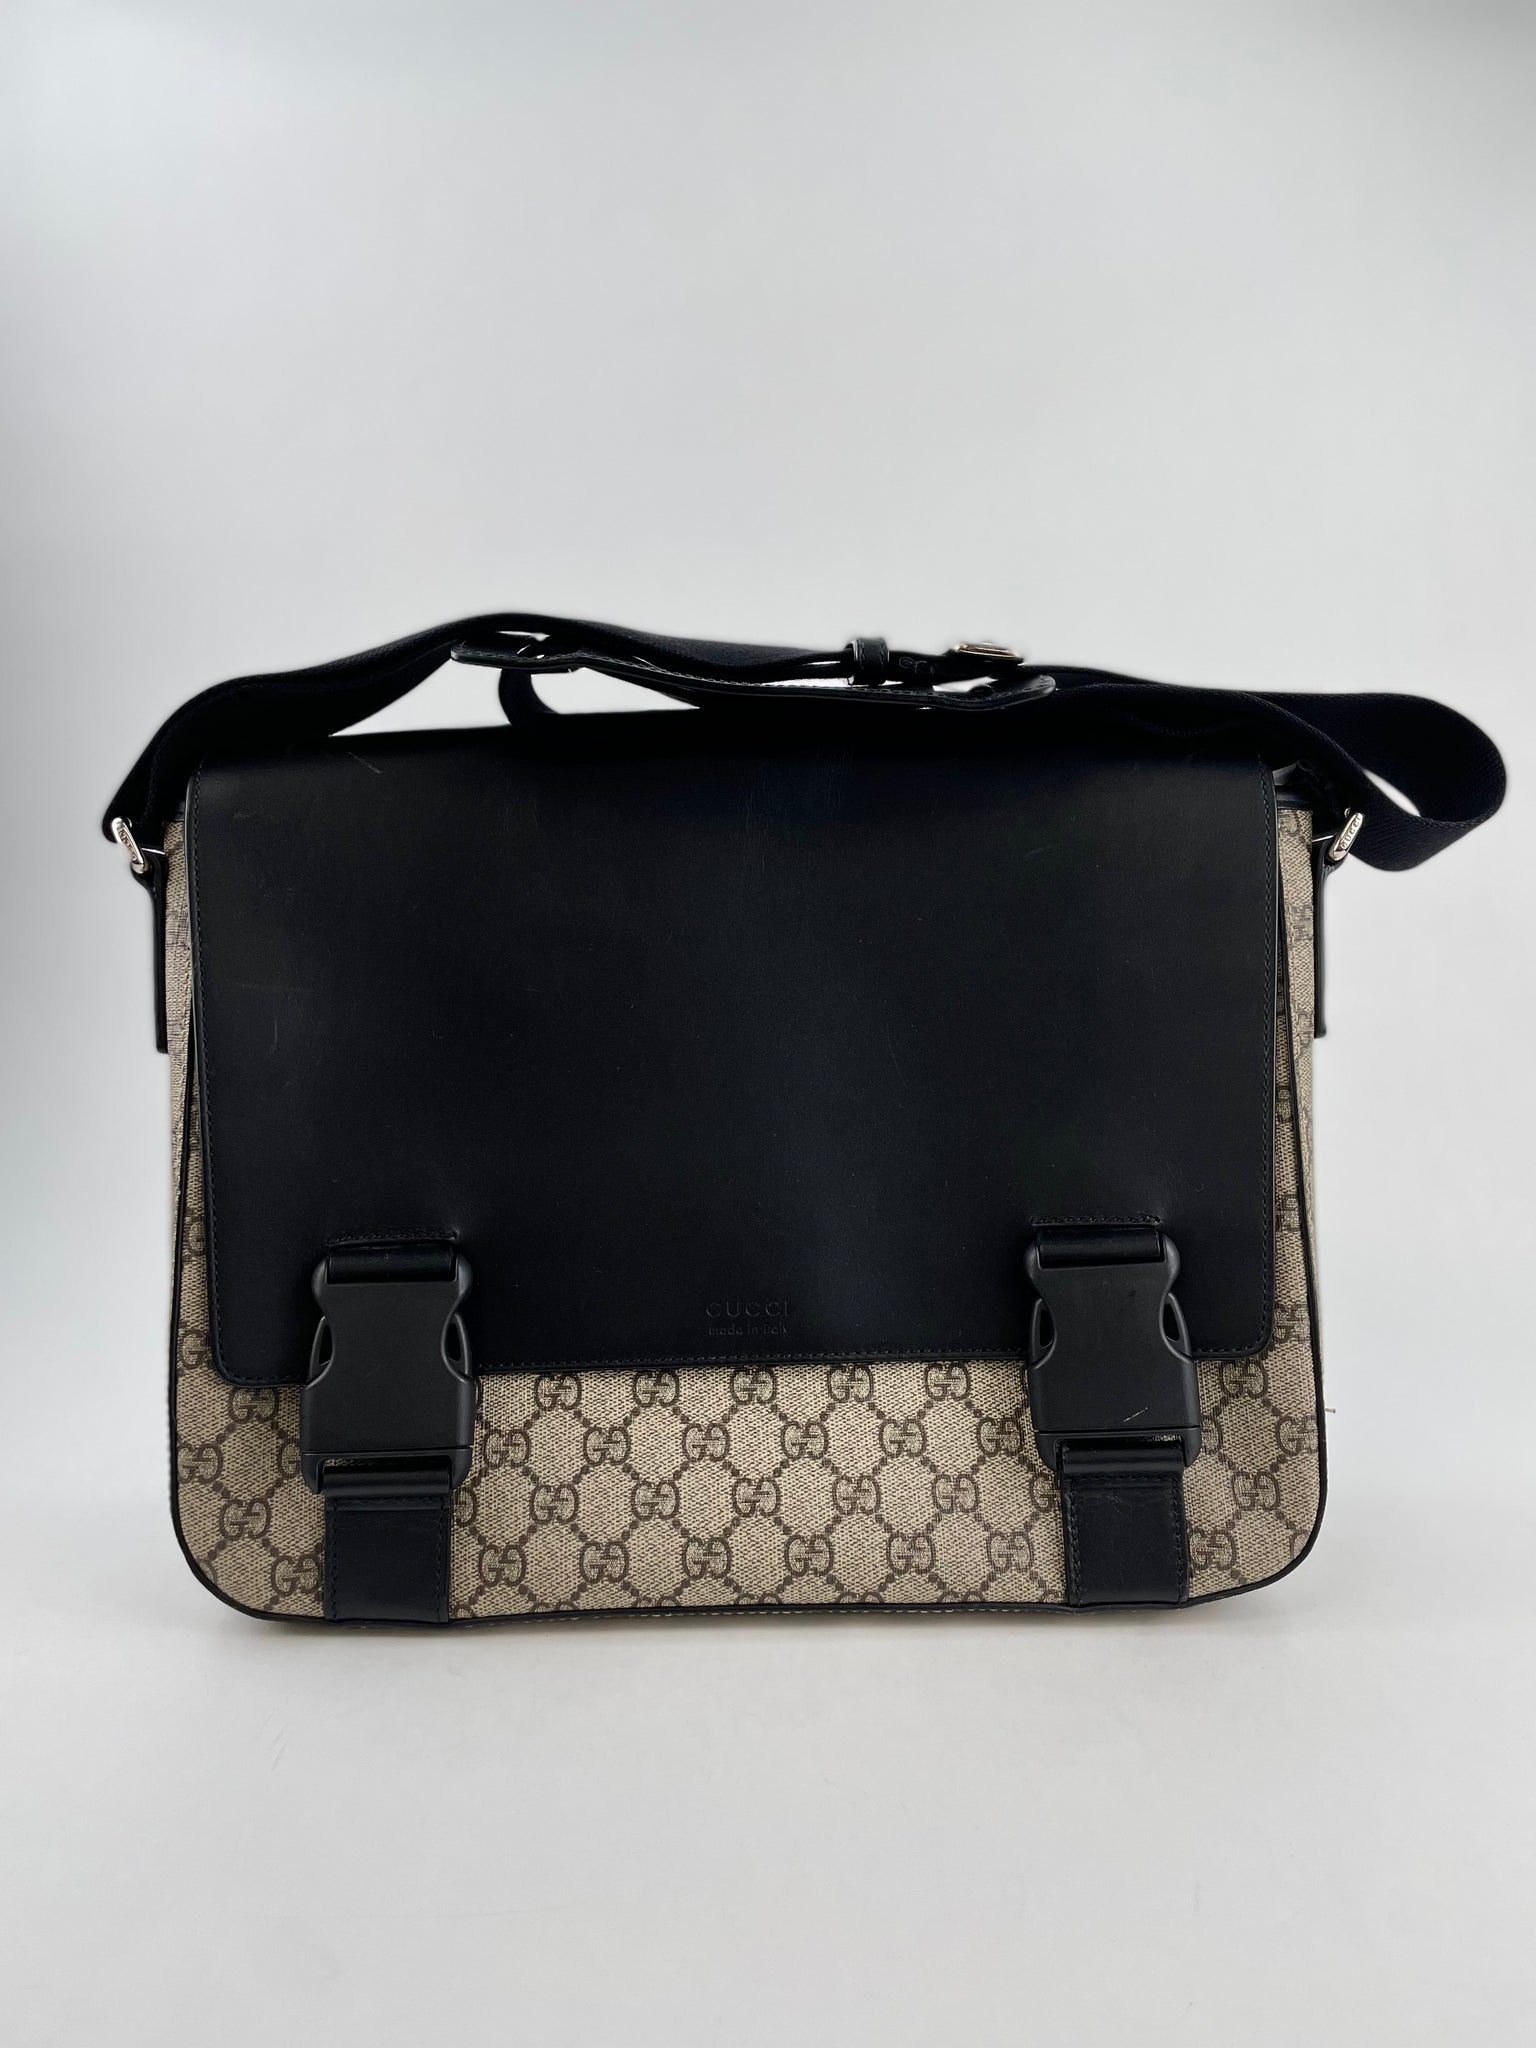 Gucci Black Signature Leather Flap Messenger Bag Gucci